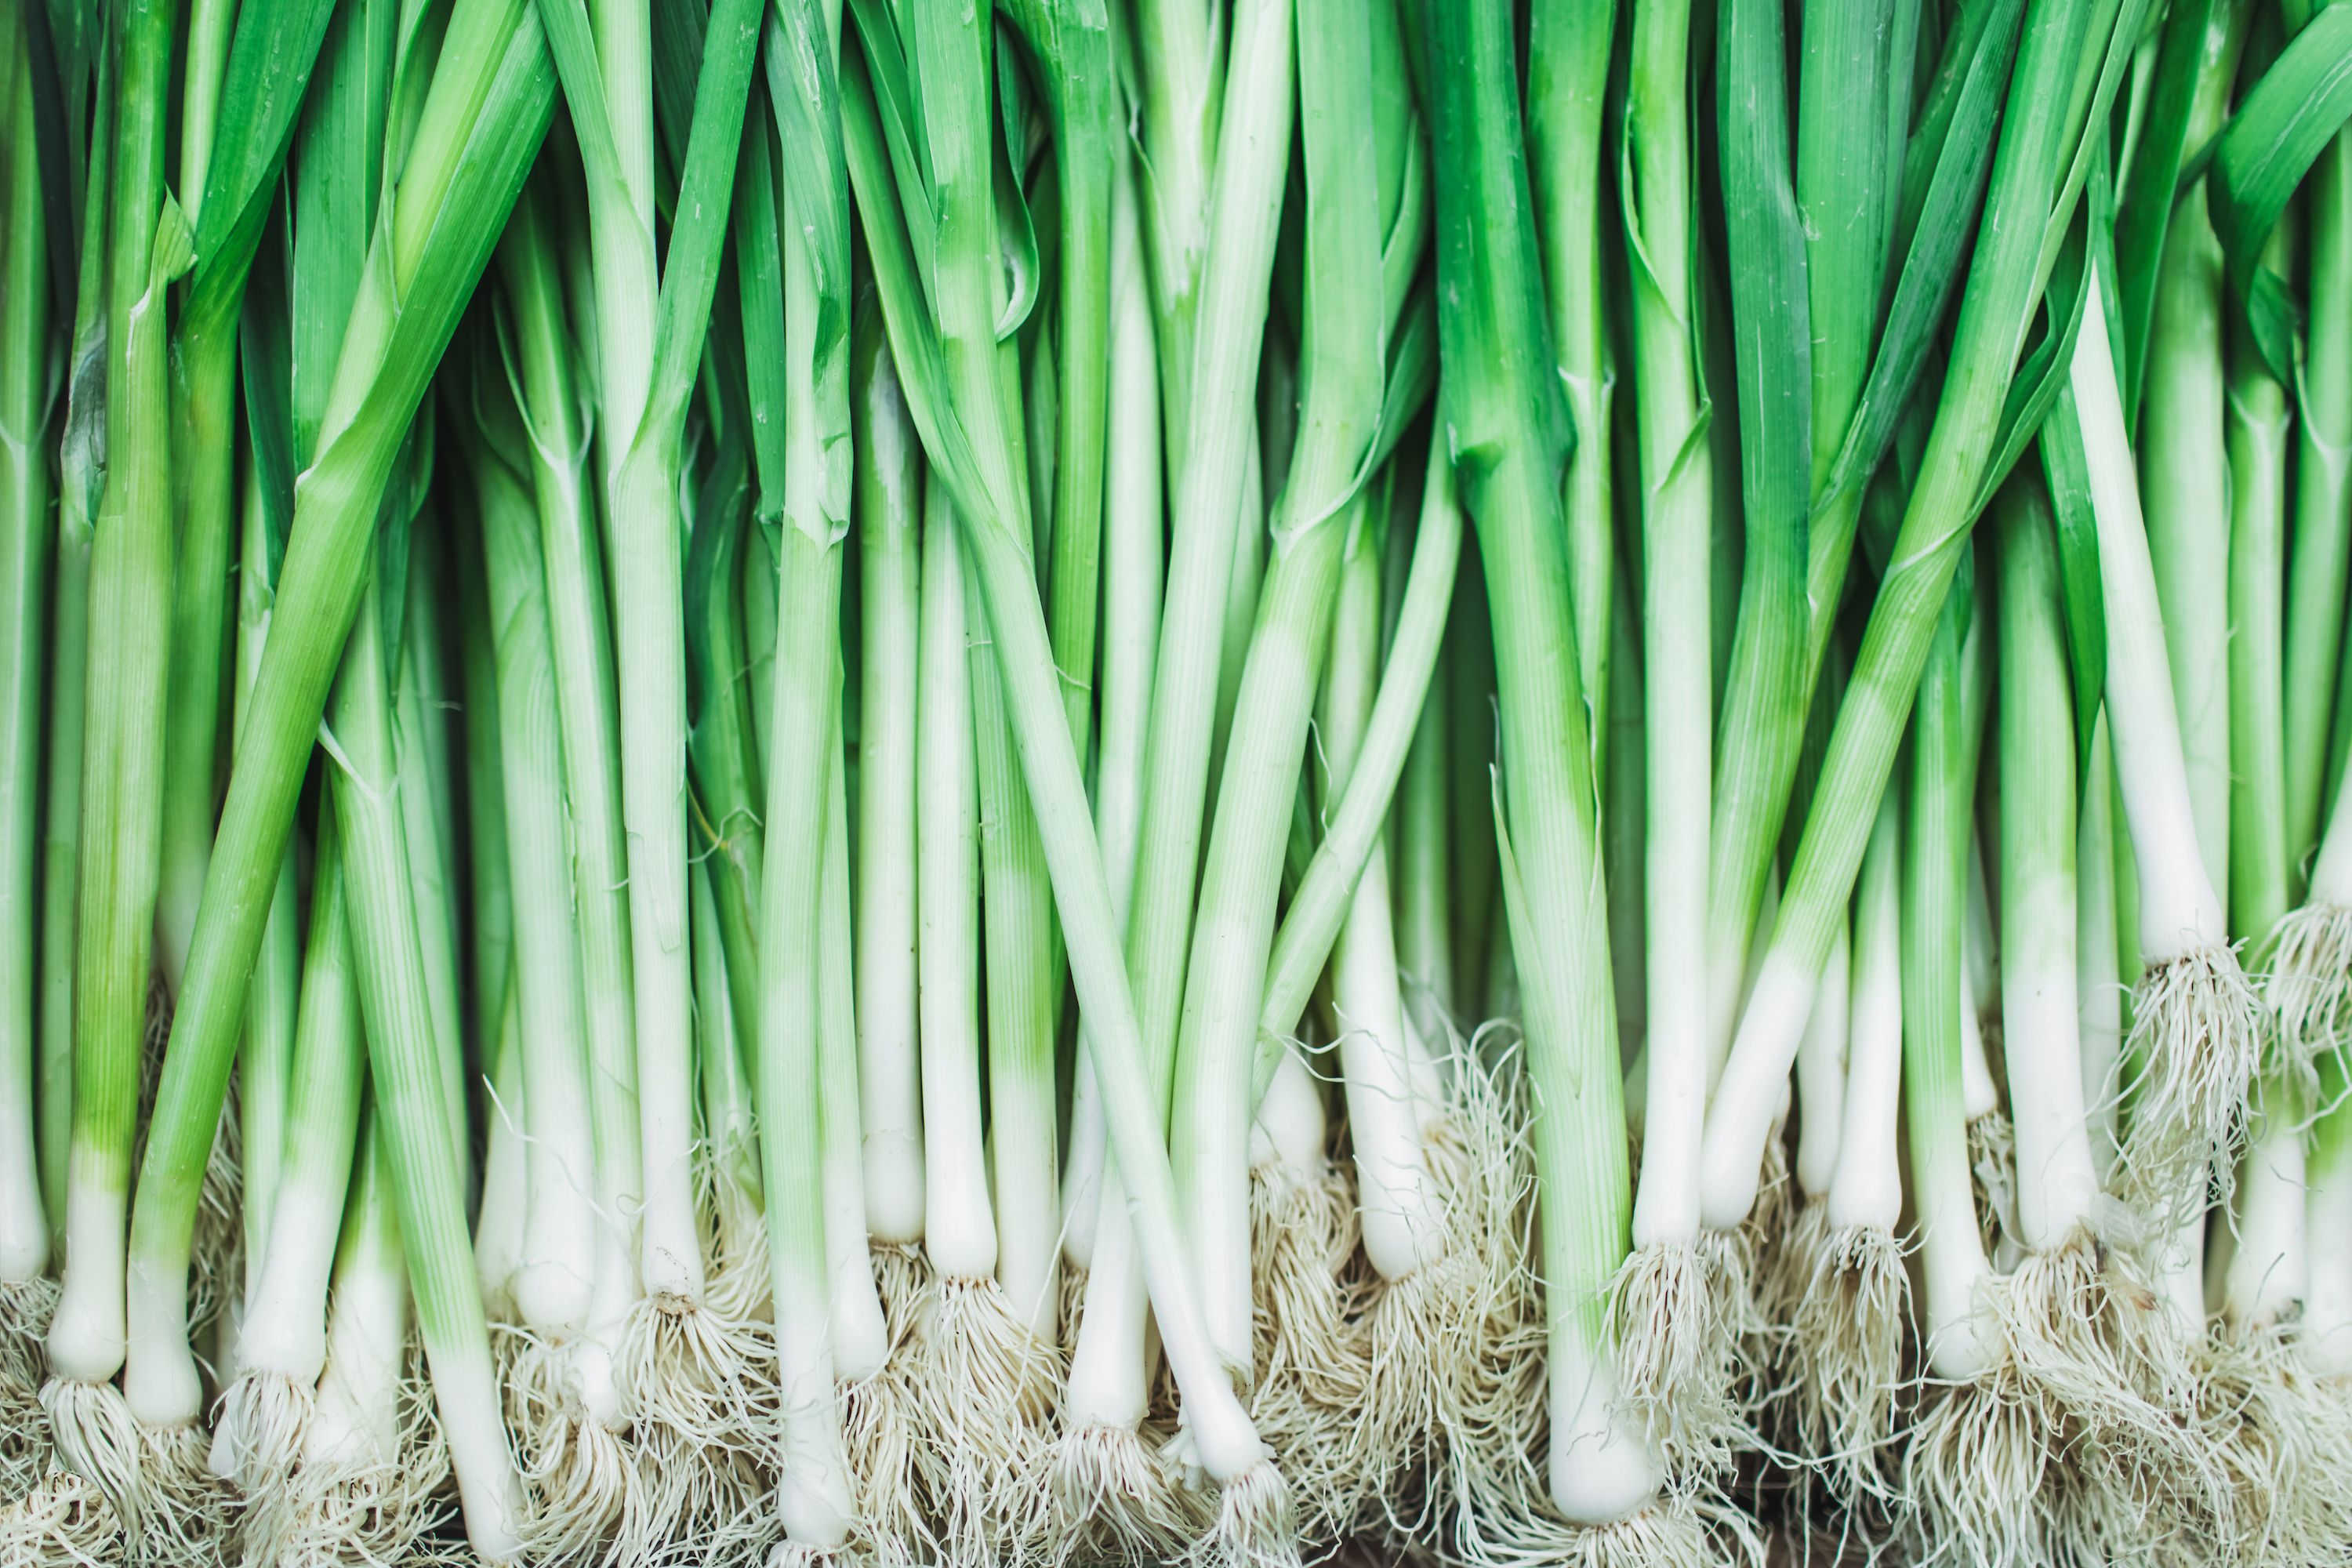 scallions vs green onion